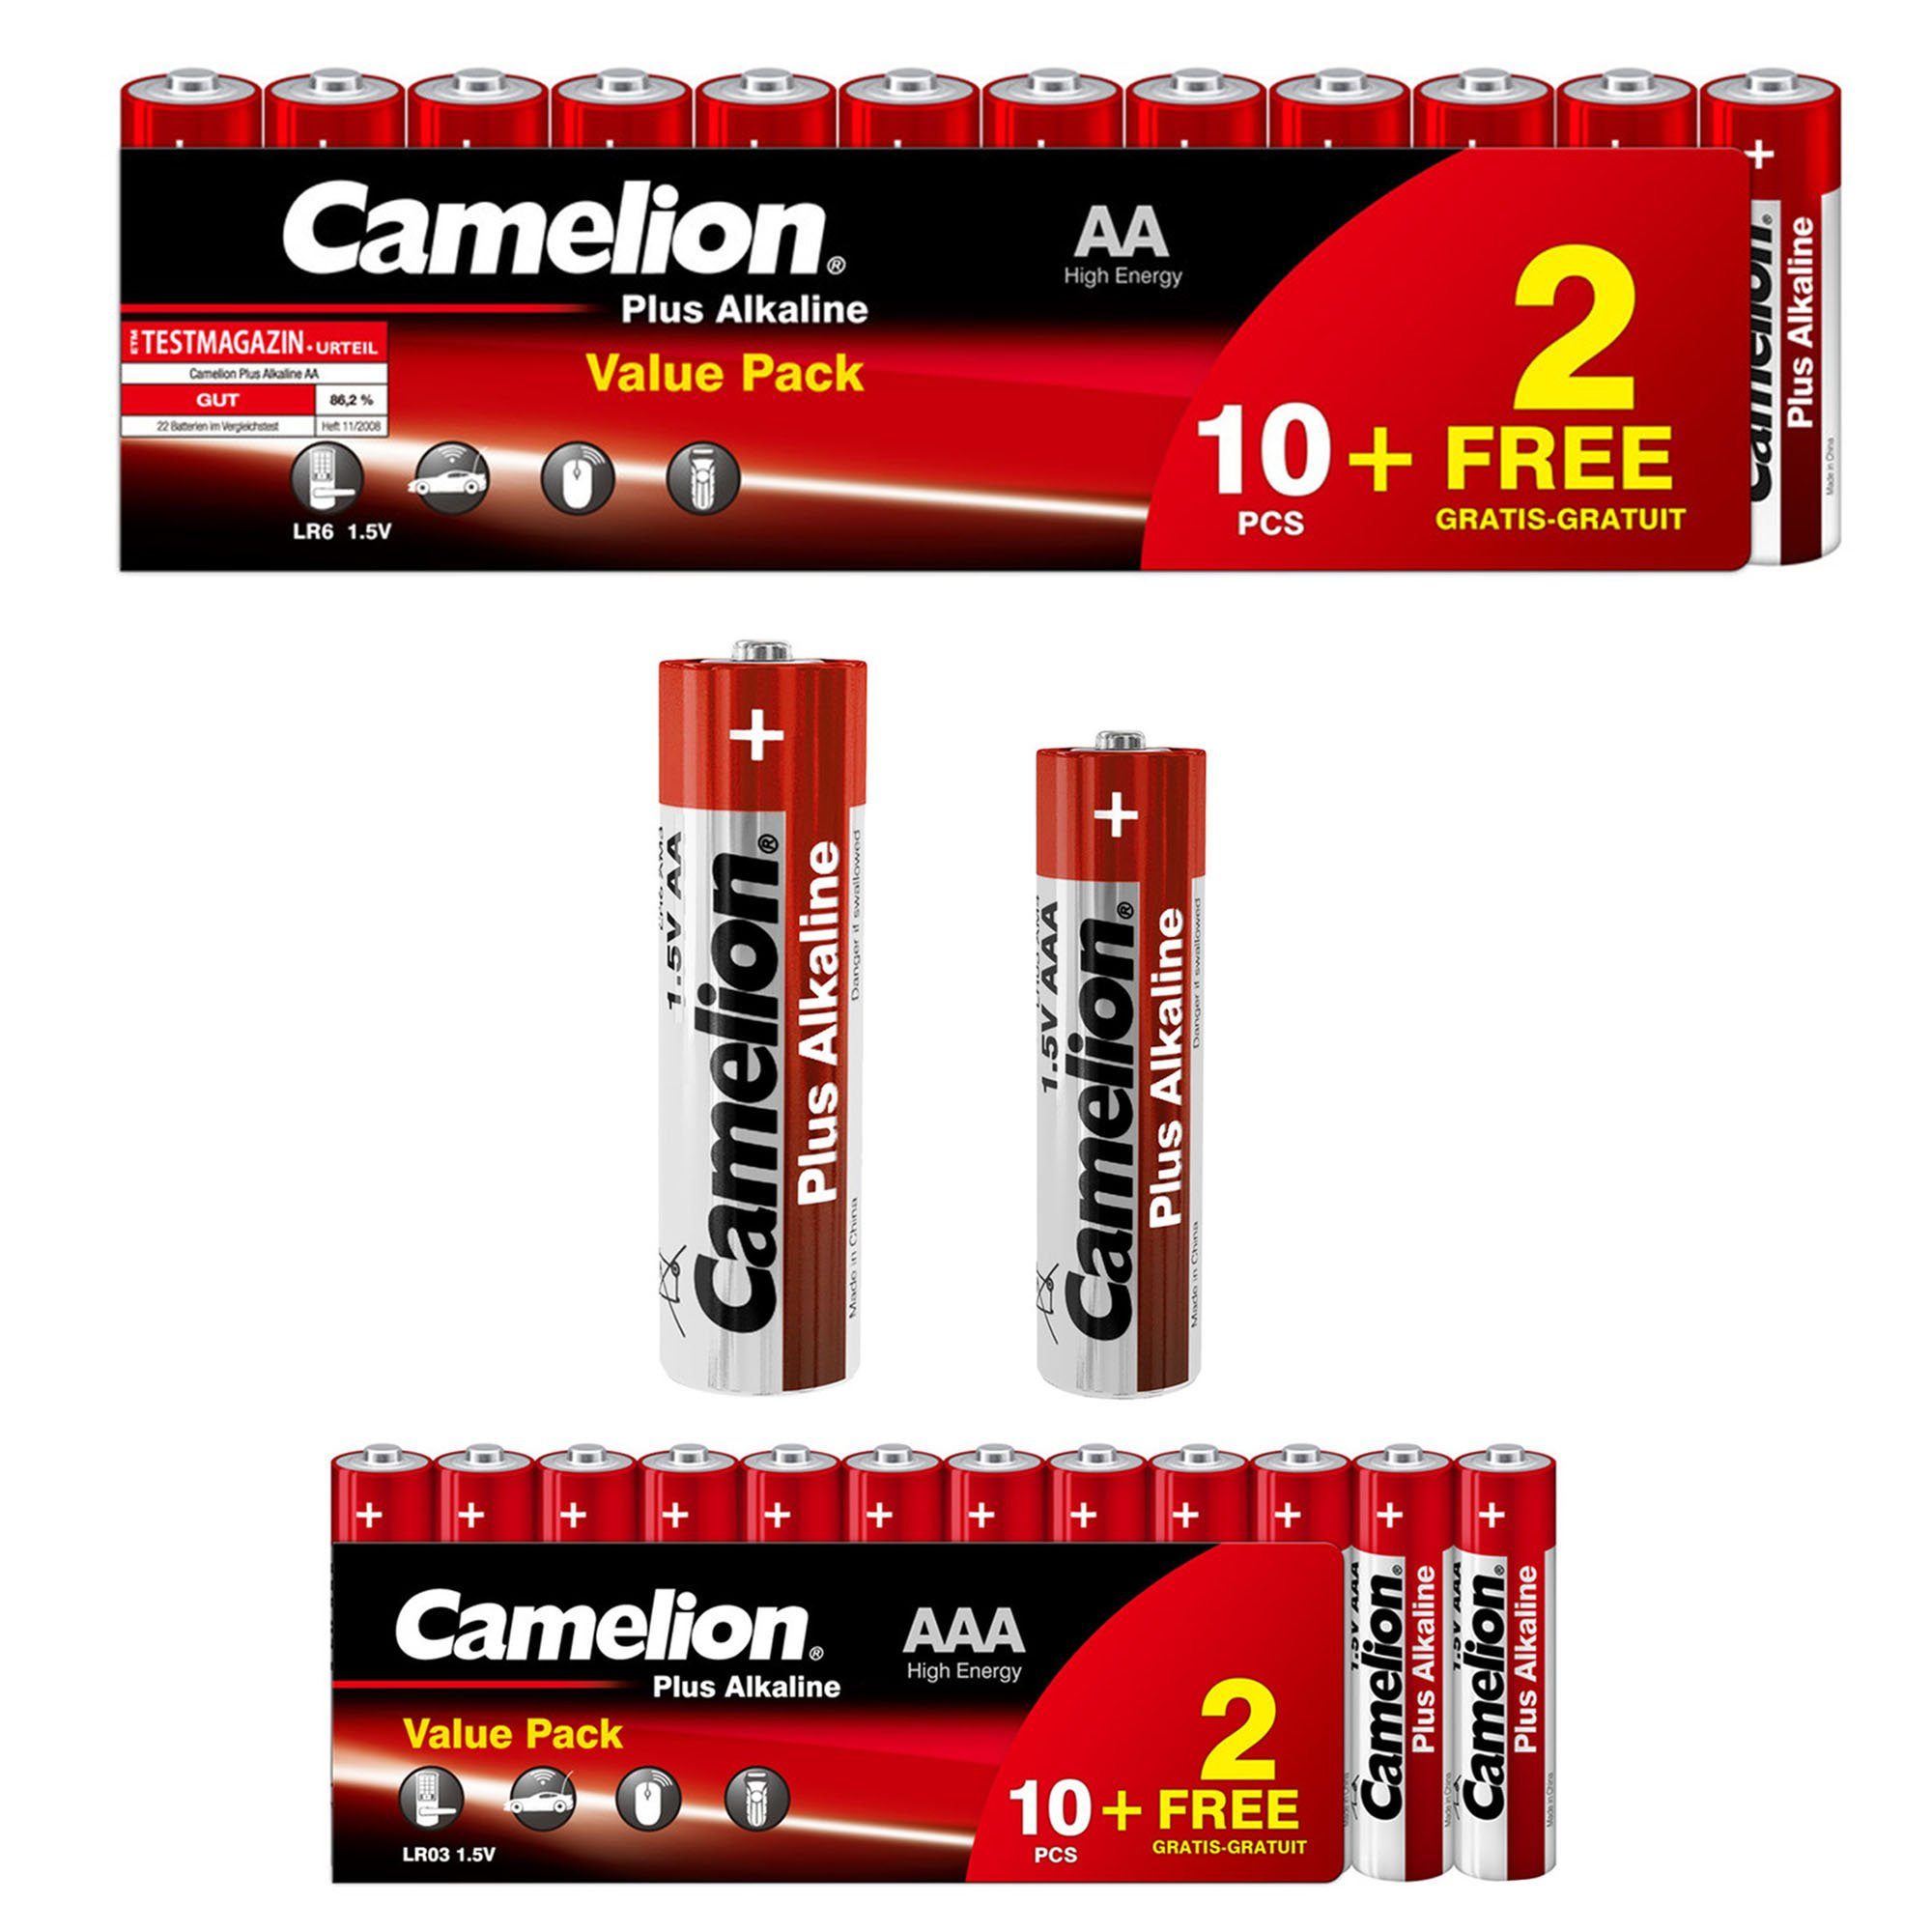 Camelion Micro Batterie, Batterien LR03, AA LR6 St), Universal, / High Plus Energy, Alkaline (1 LR6 AAA AA 1,5V Mignon